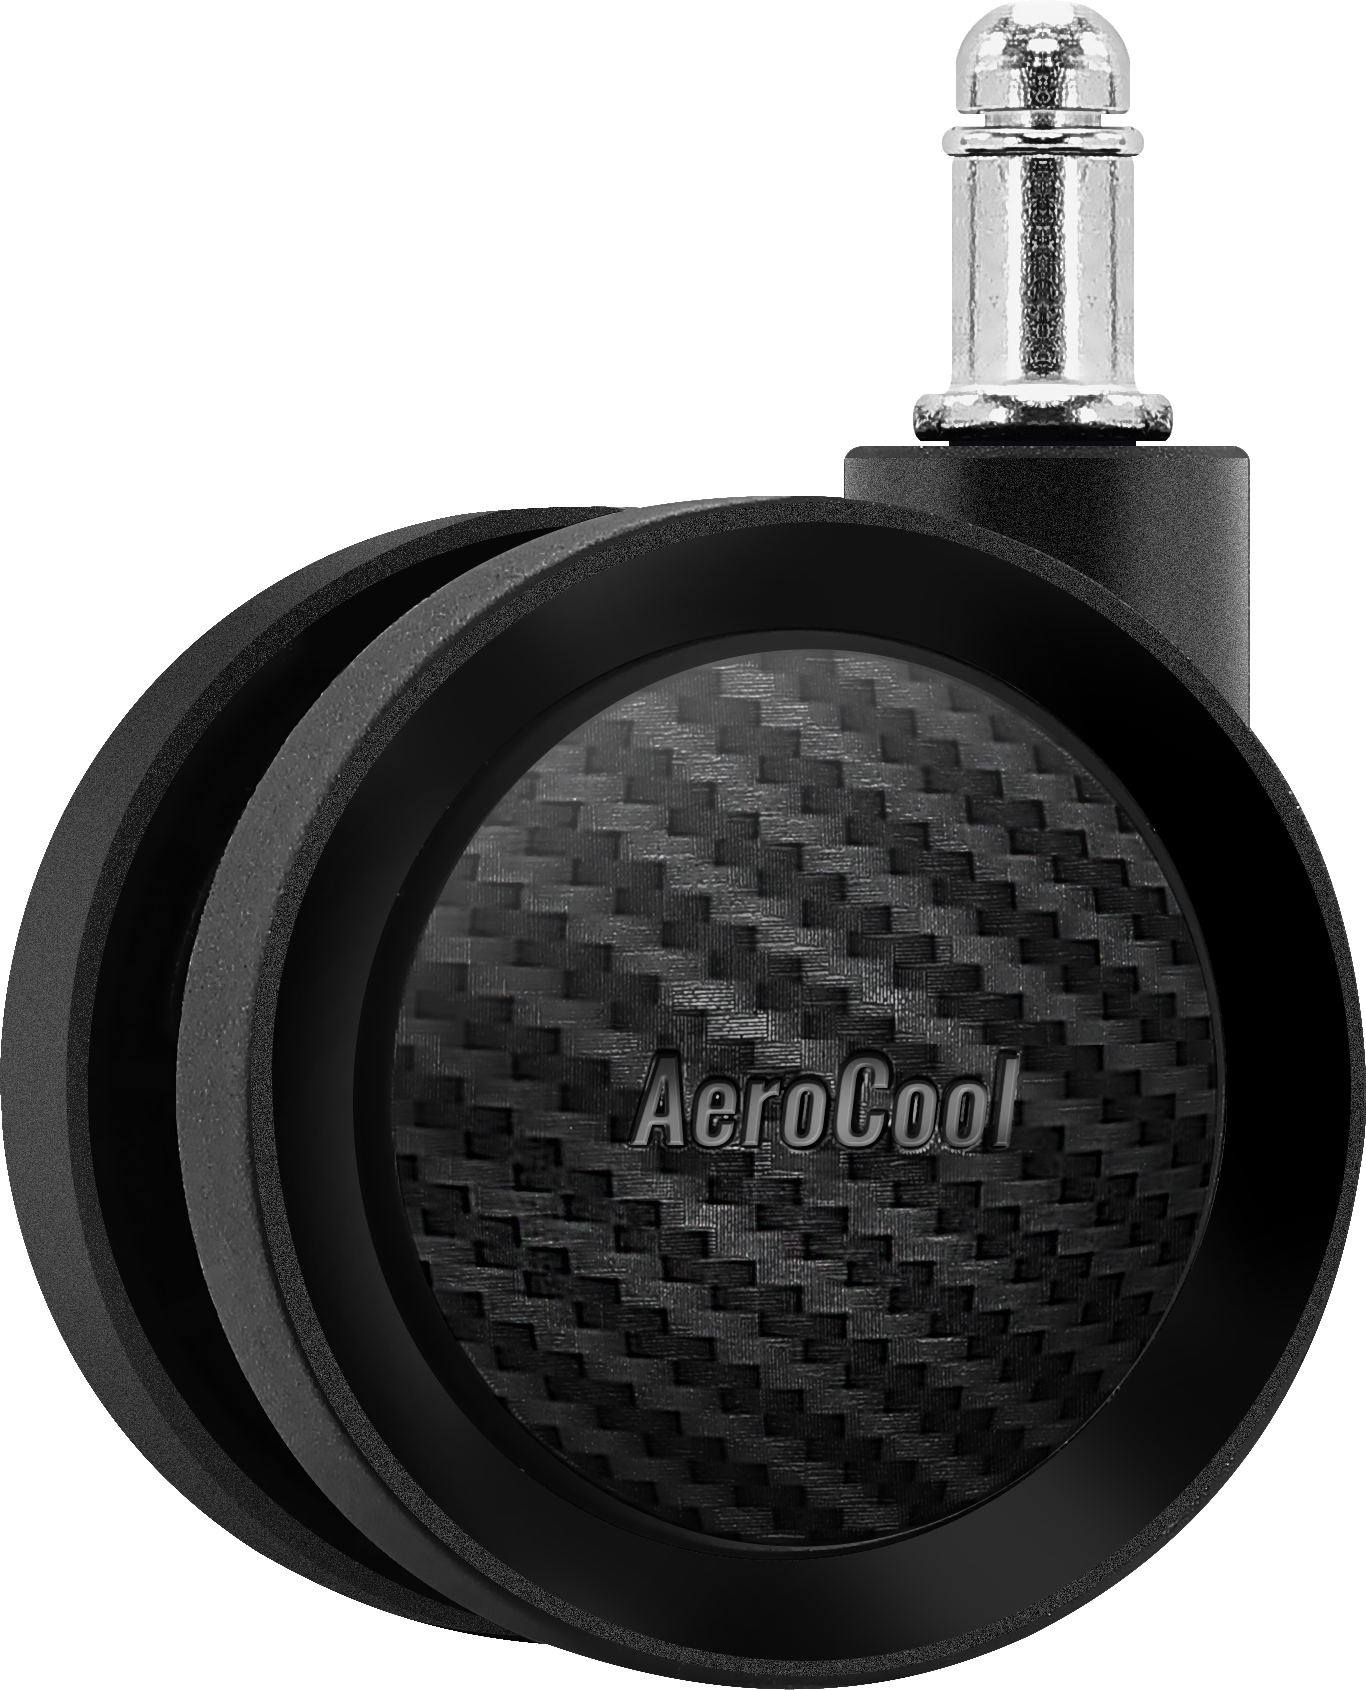 Aerocool - Aerocool Crown Nobility Series Gaming Chair - Black/White